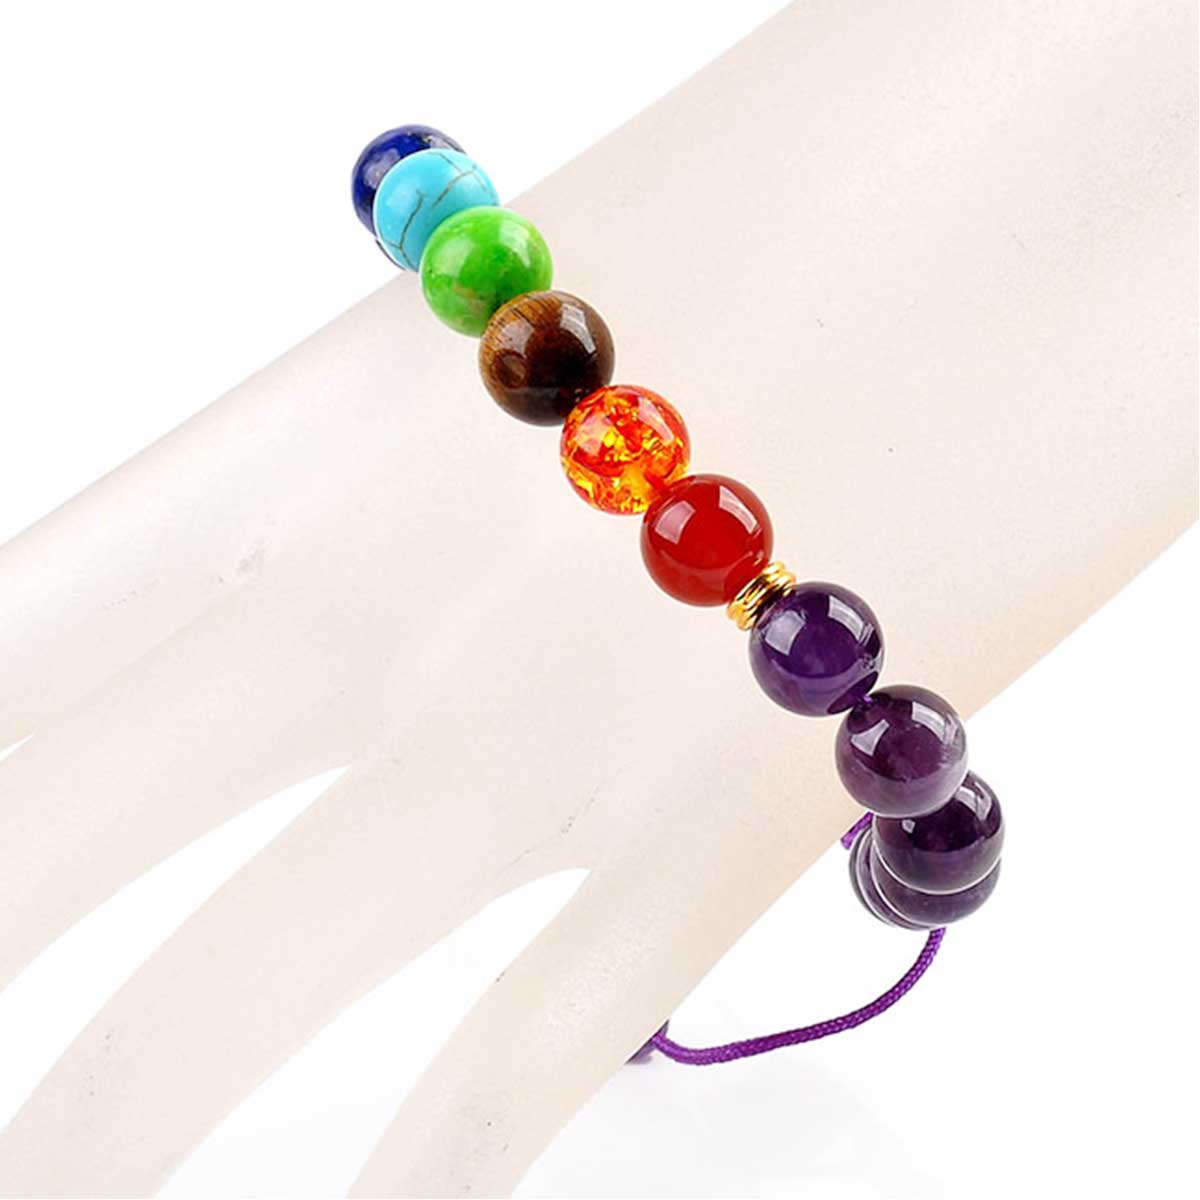 jjb069102-unisex-7-chakra-gemstone-quartz-bead-adjustable-bracelet